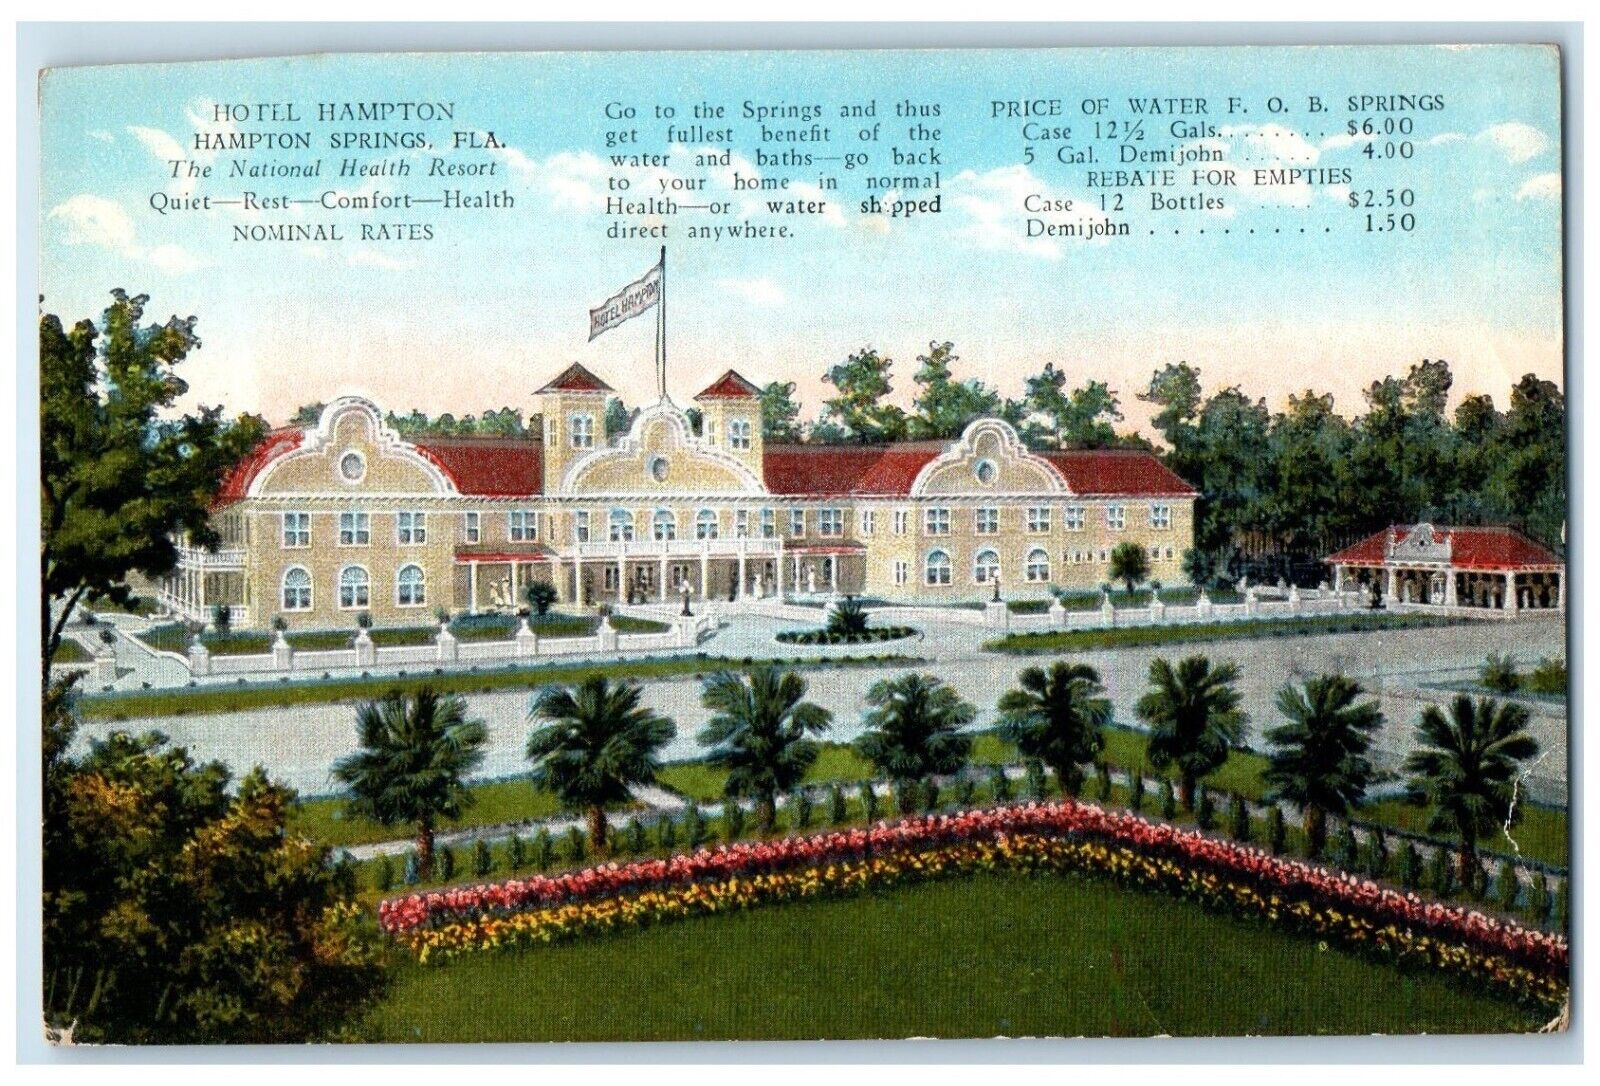 1910 Hotel Hampton Building Hampton Springs Florida Vintage Advertising Postcard